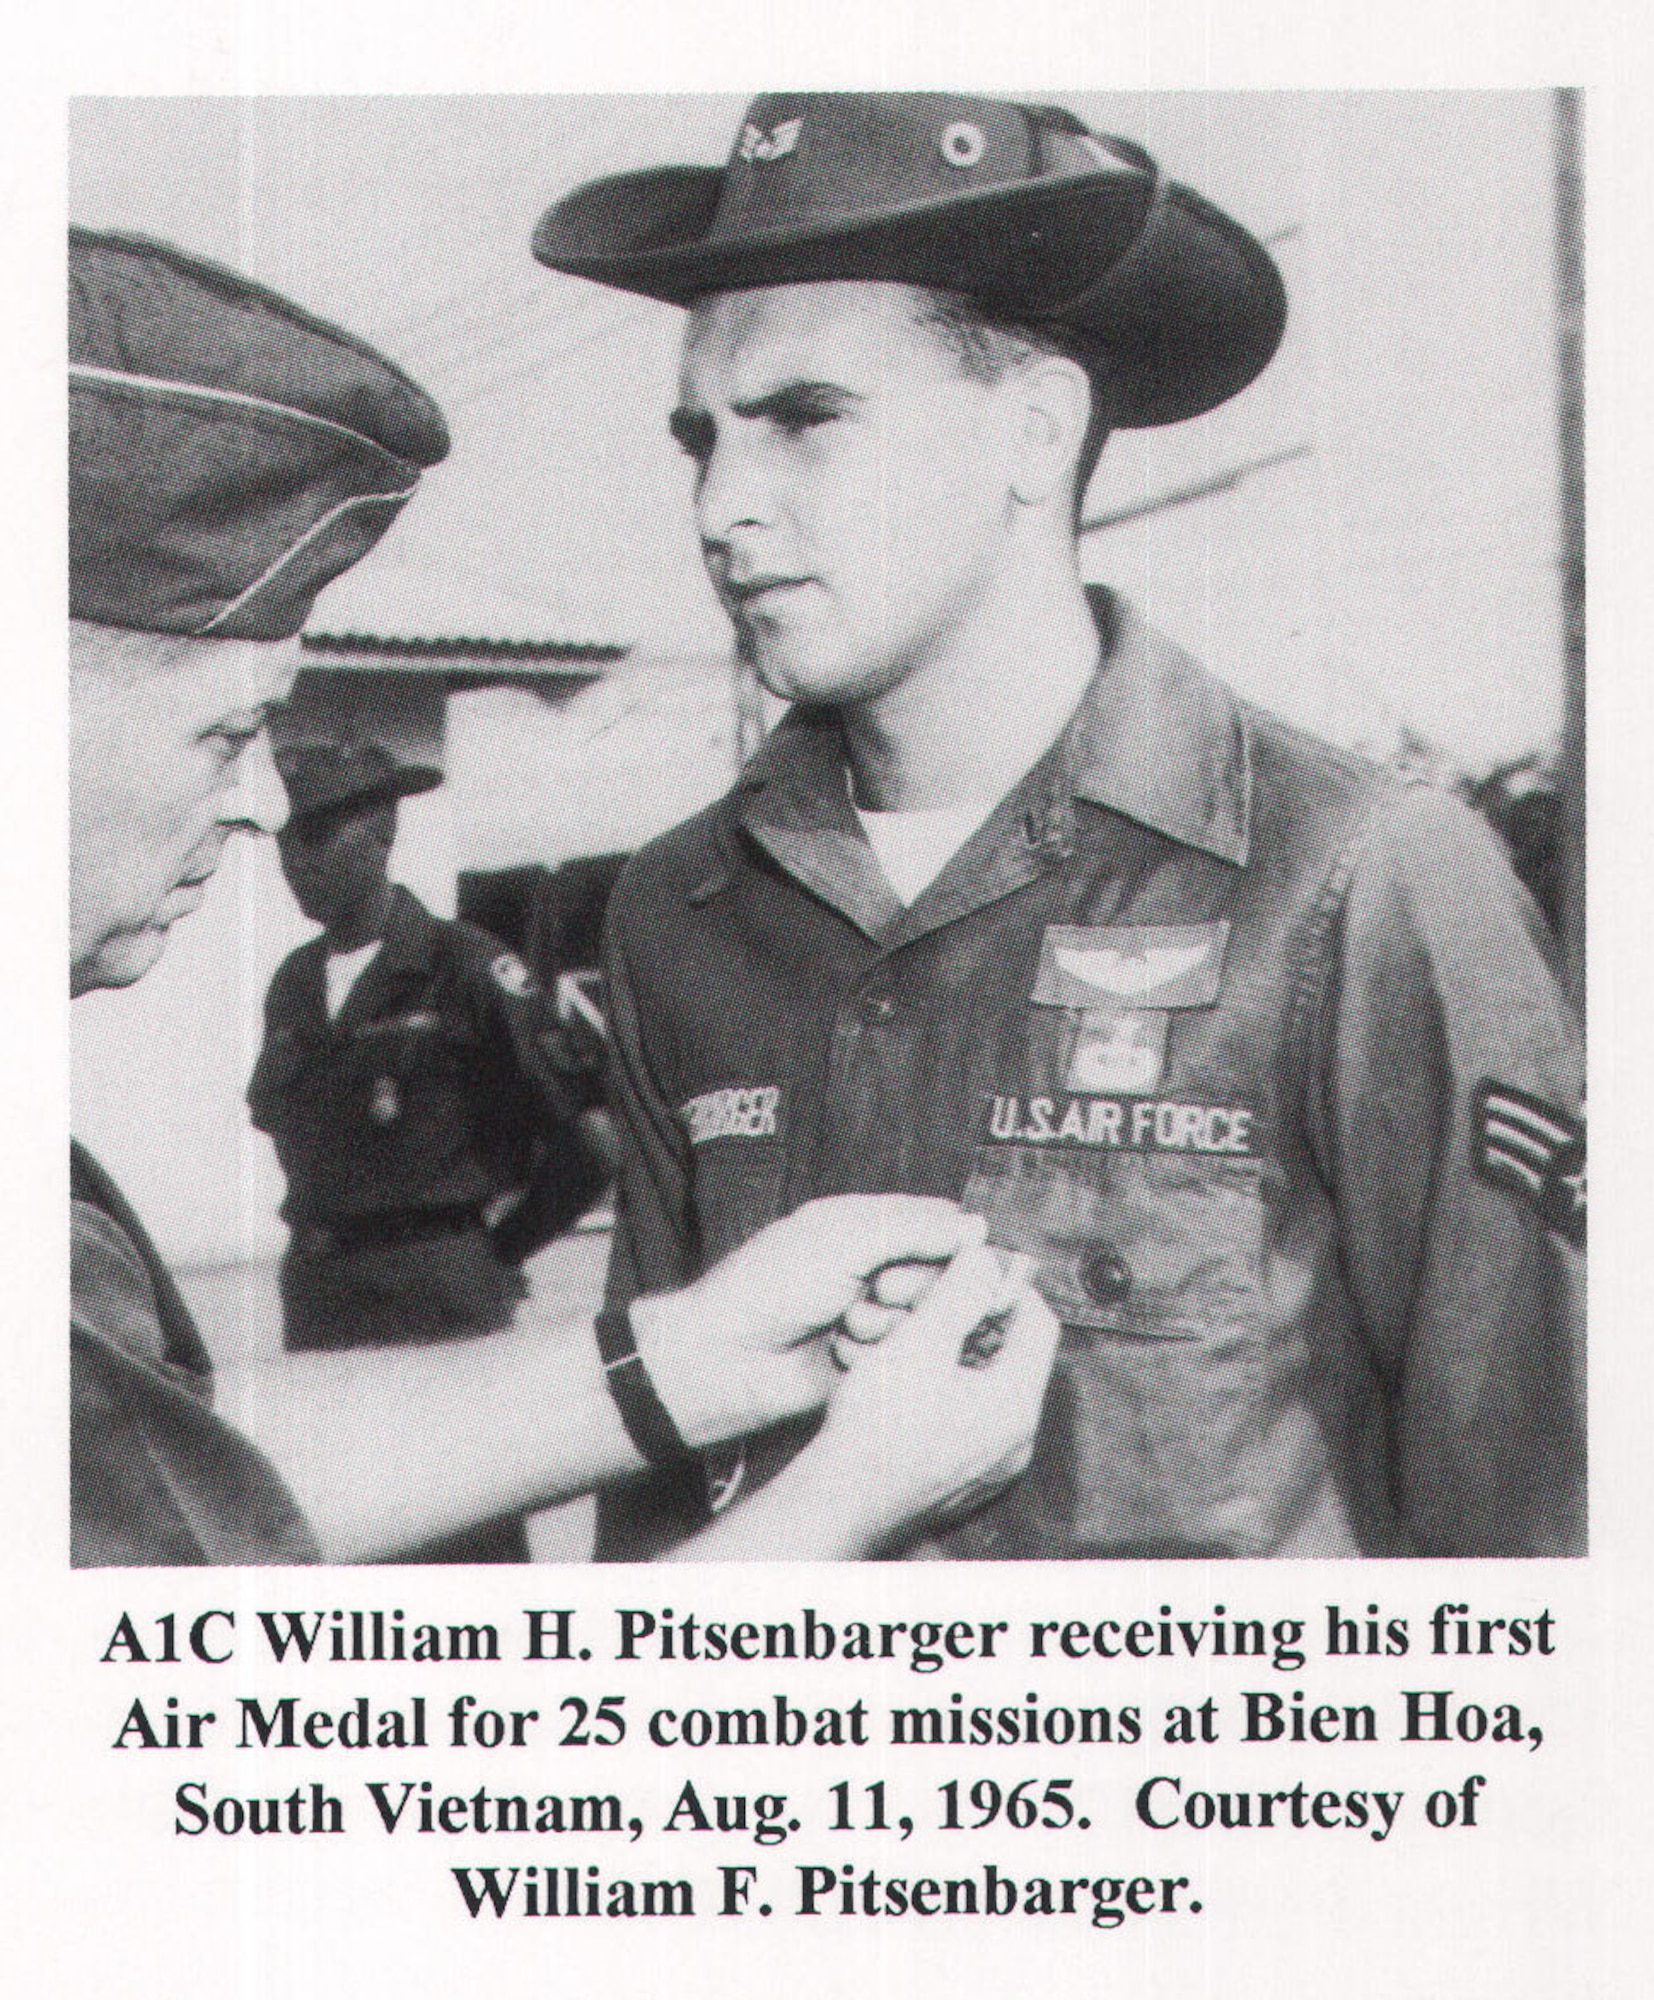 A1C William H. Pitsenbarger receiving an Air Medal.
Medal of Honor recipient, Vietnam.